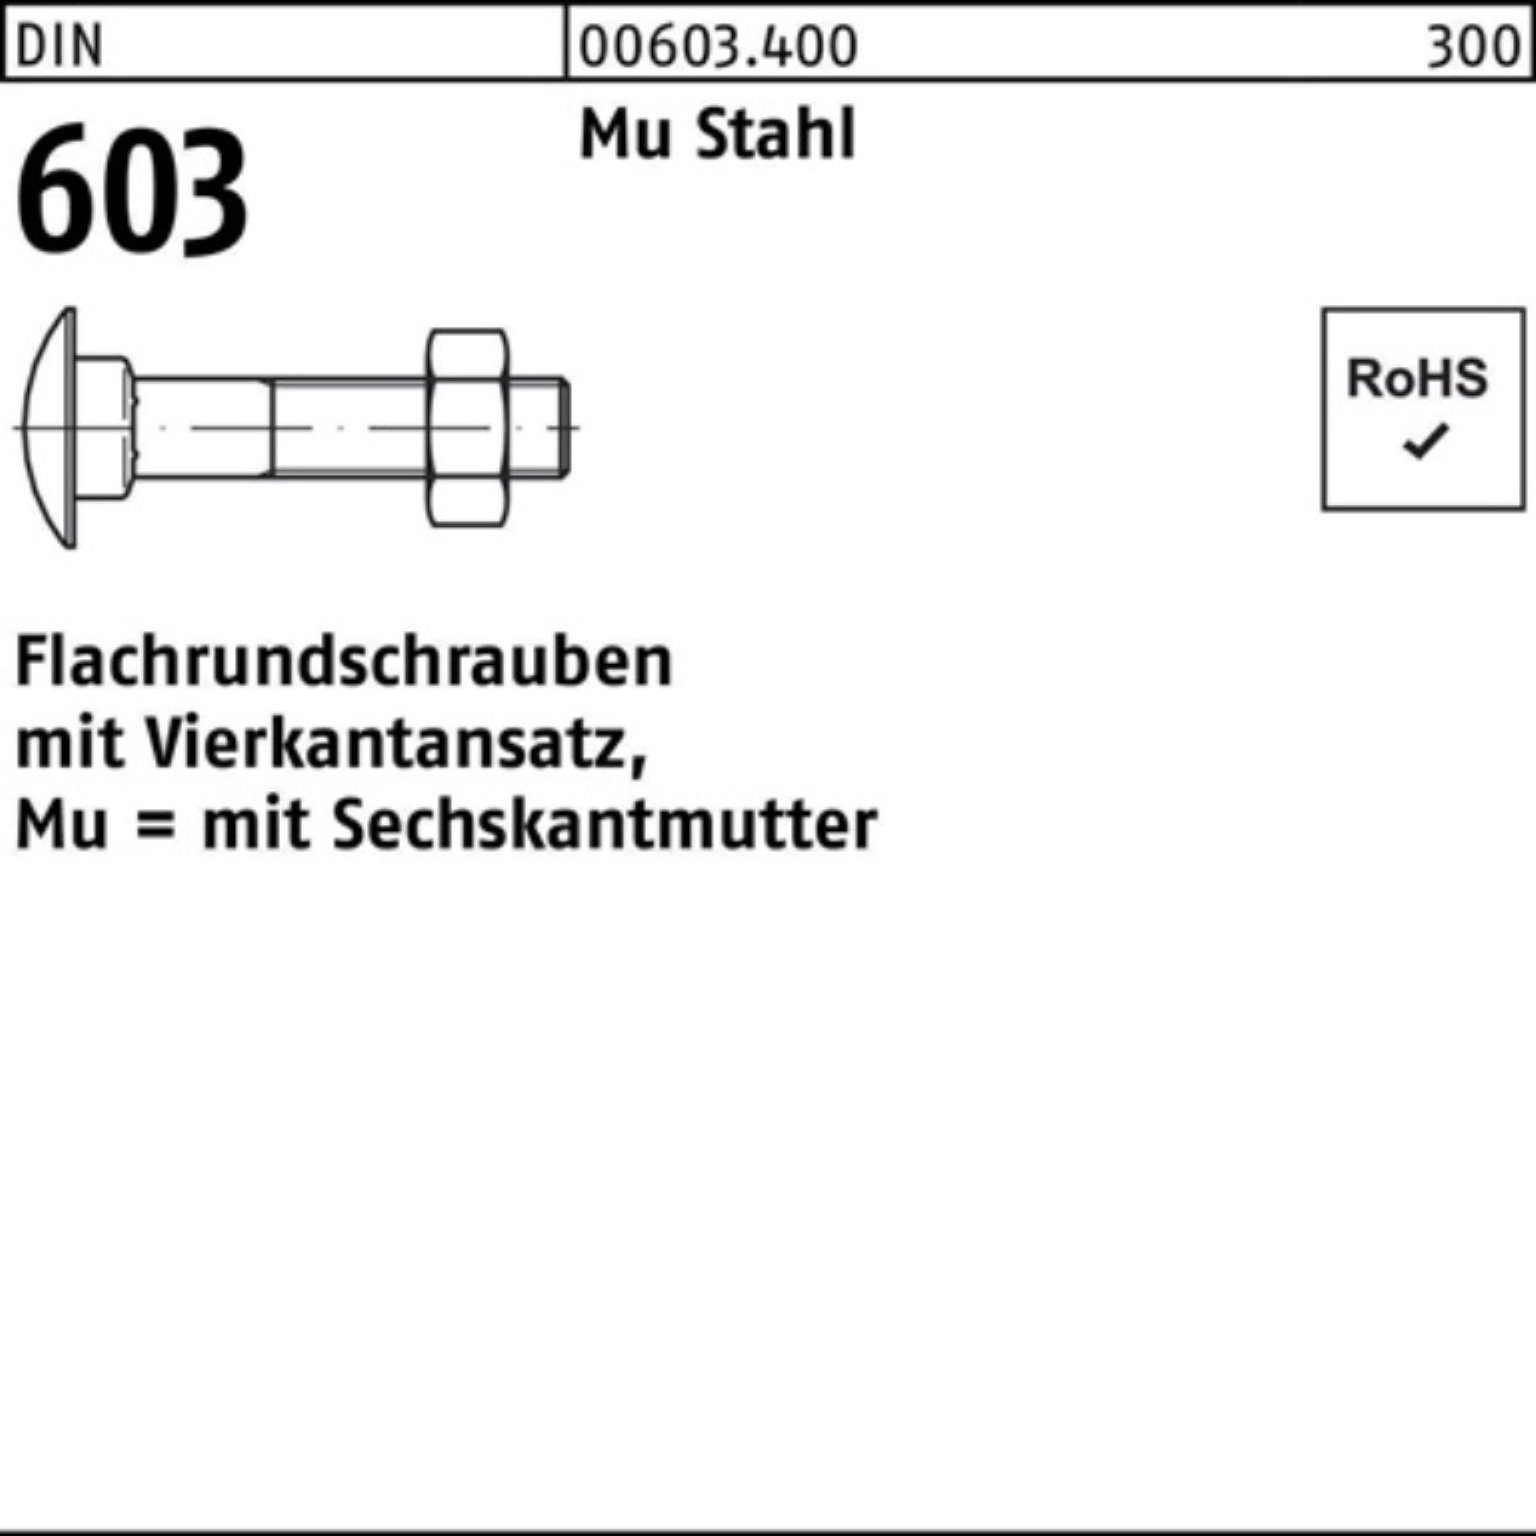 Reyher Schraube 603 M16x45 Flachrundschraube 100er Vierkantansatz/6-ktmutter DIN Pack